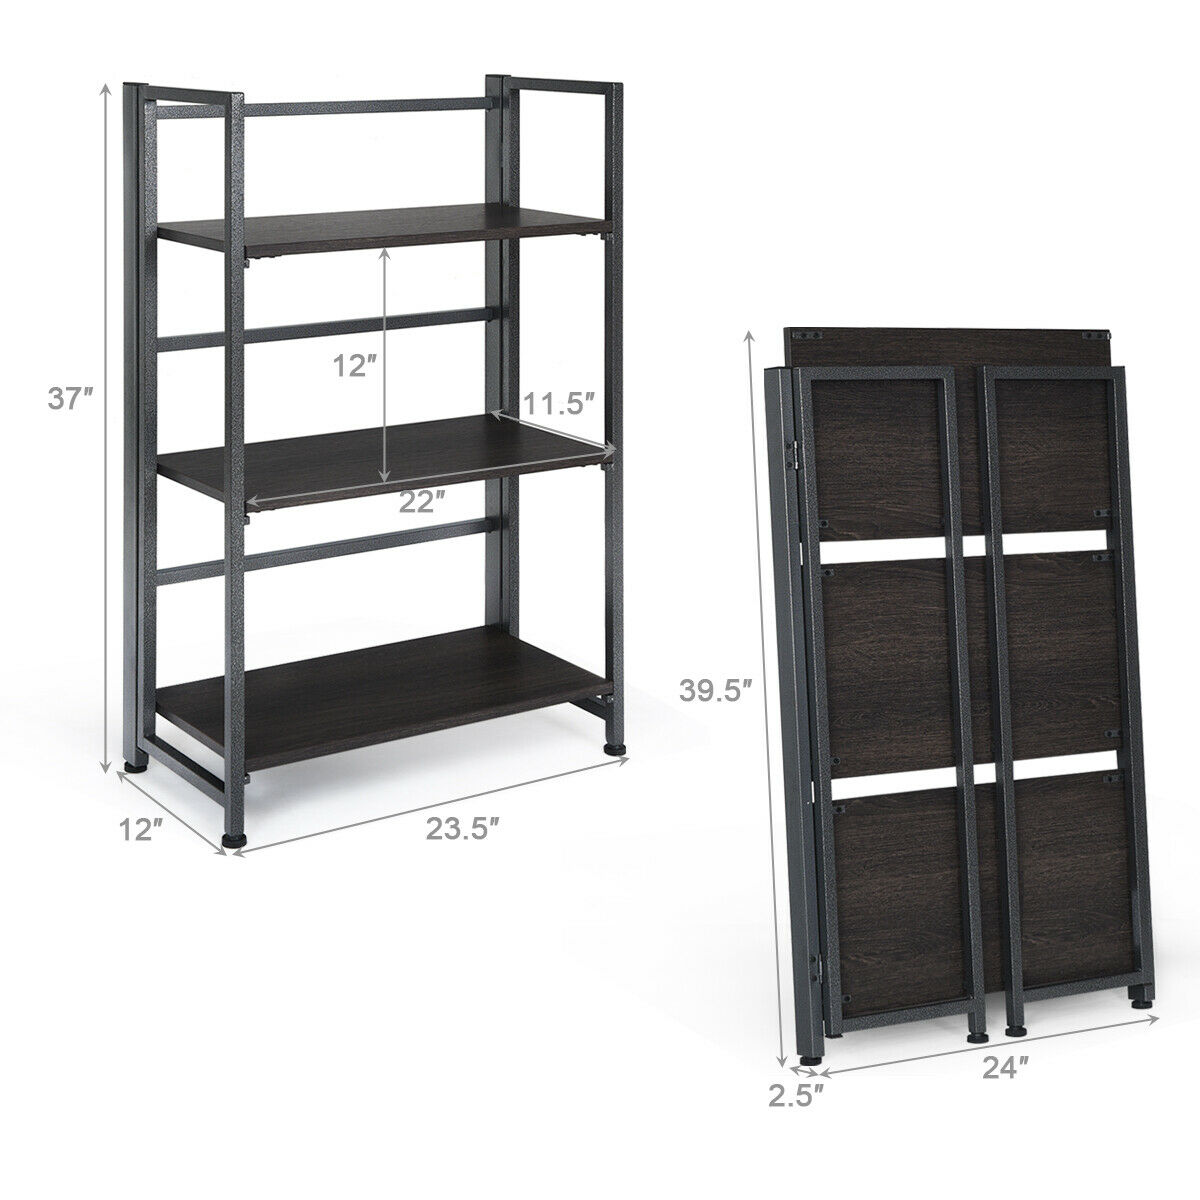 Costway 3-Tier Folding Bookshelf Foldable Metal Storage Shelf Portable Display Rack Grey - image 2 of 10